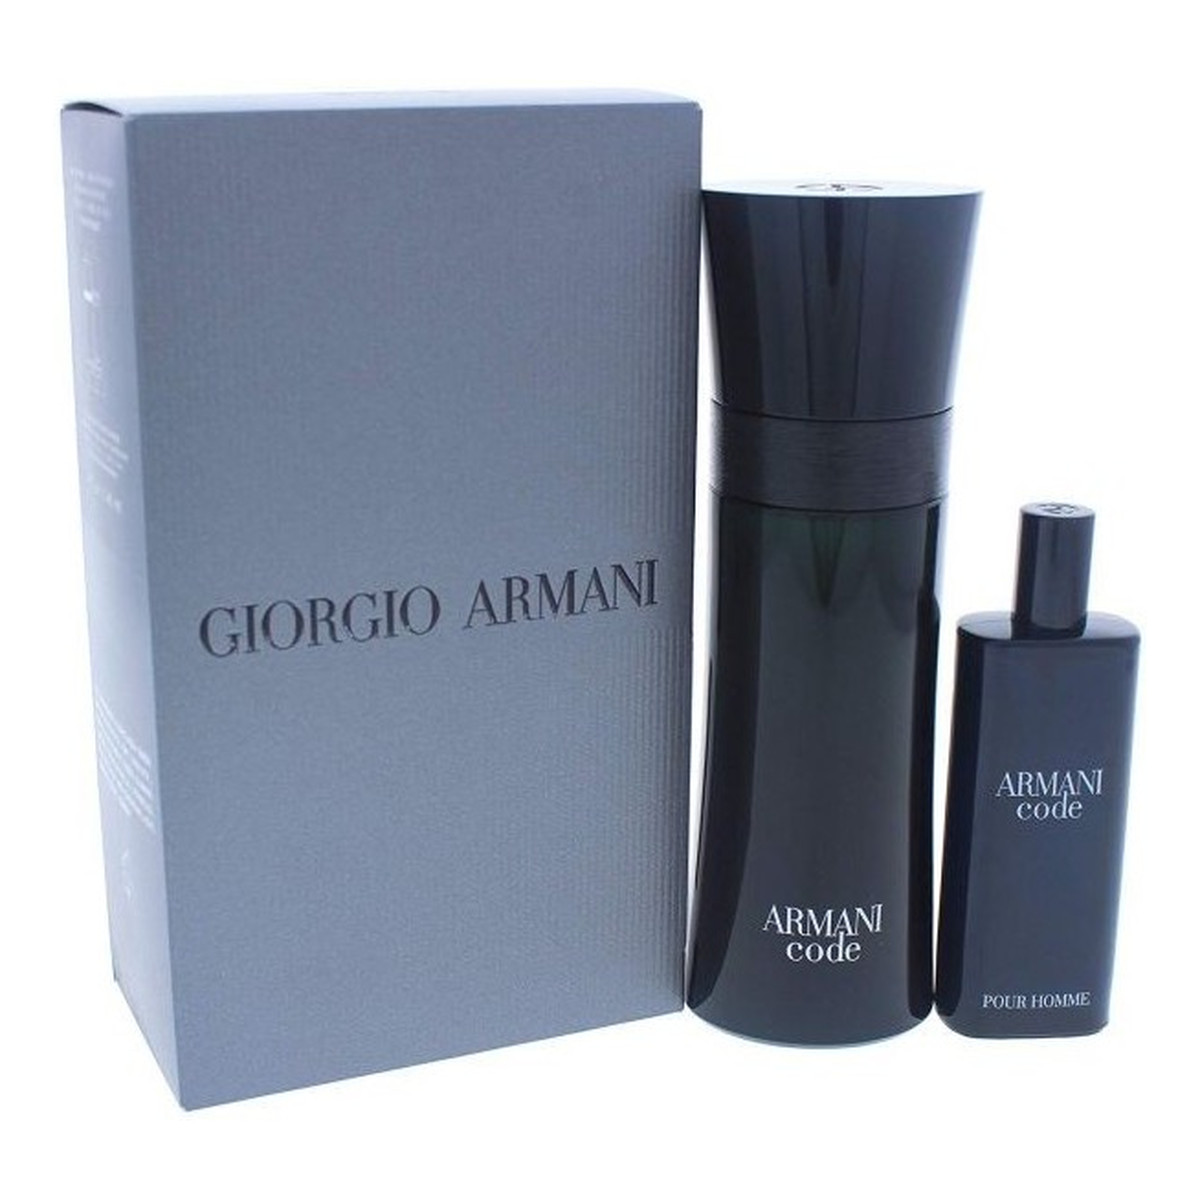 Giorgio Armani Code Pour Homme zestaw (woda toaletowa 75ml + woda toaletowa 15ml)